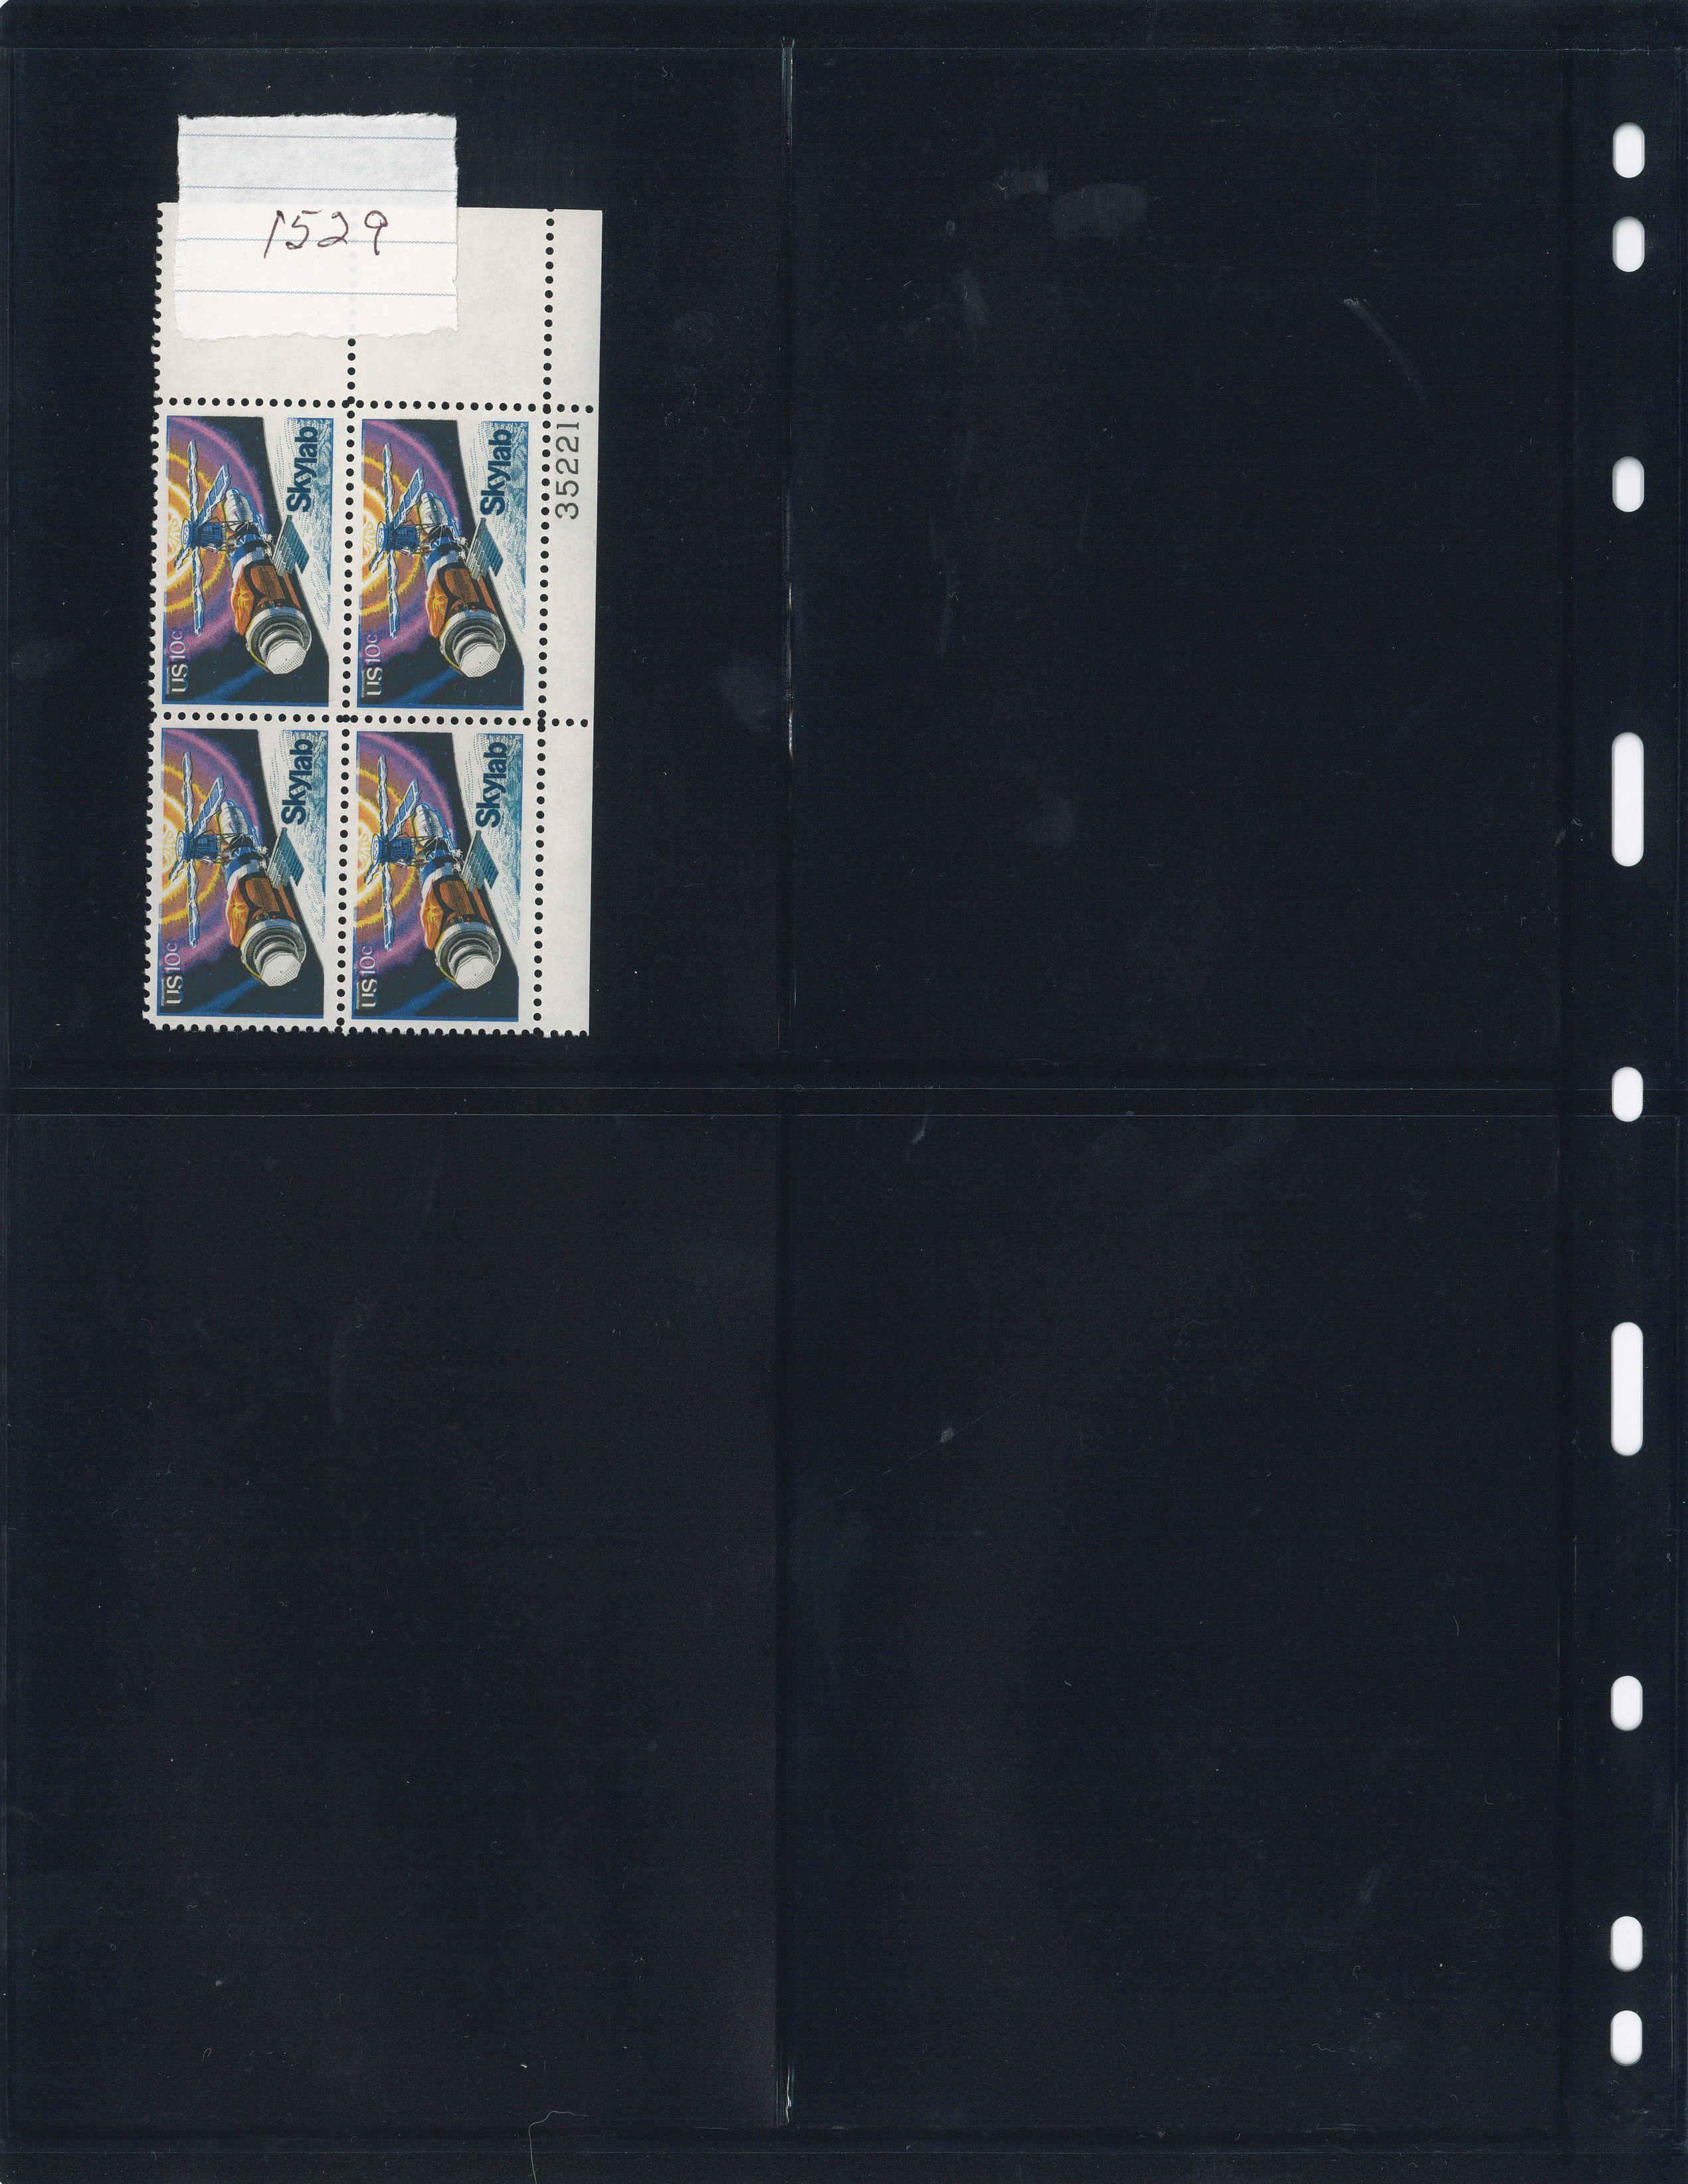 Assortment of USA Stamps (Scott # range 1199-1596)